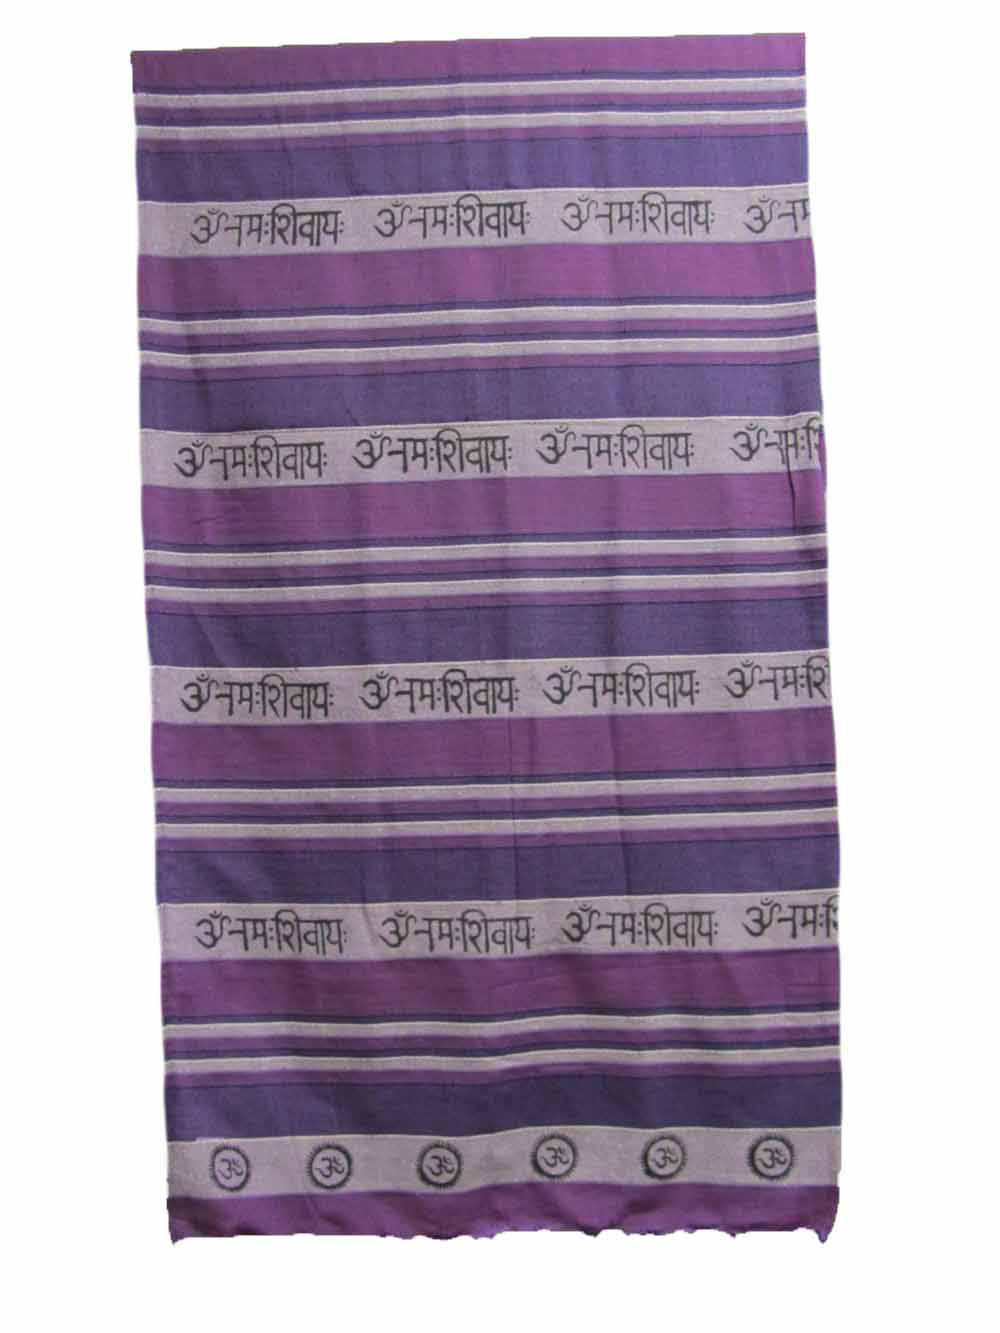 Purple Indian Cotton Om Namah Shivay Yoga Full Size Bedspread Tapestry - Ambali Fashion Tapestries beach, boho, classic, coverlet, curtain, decoration, dorm, ethnic, gypsy, hippie, meditation